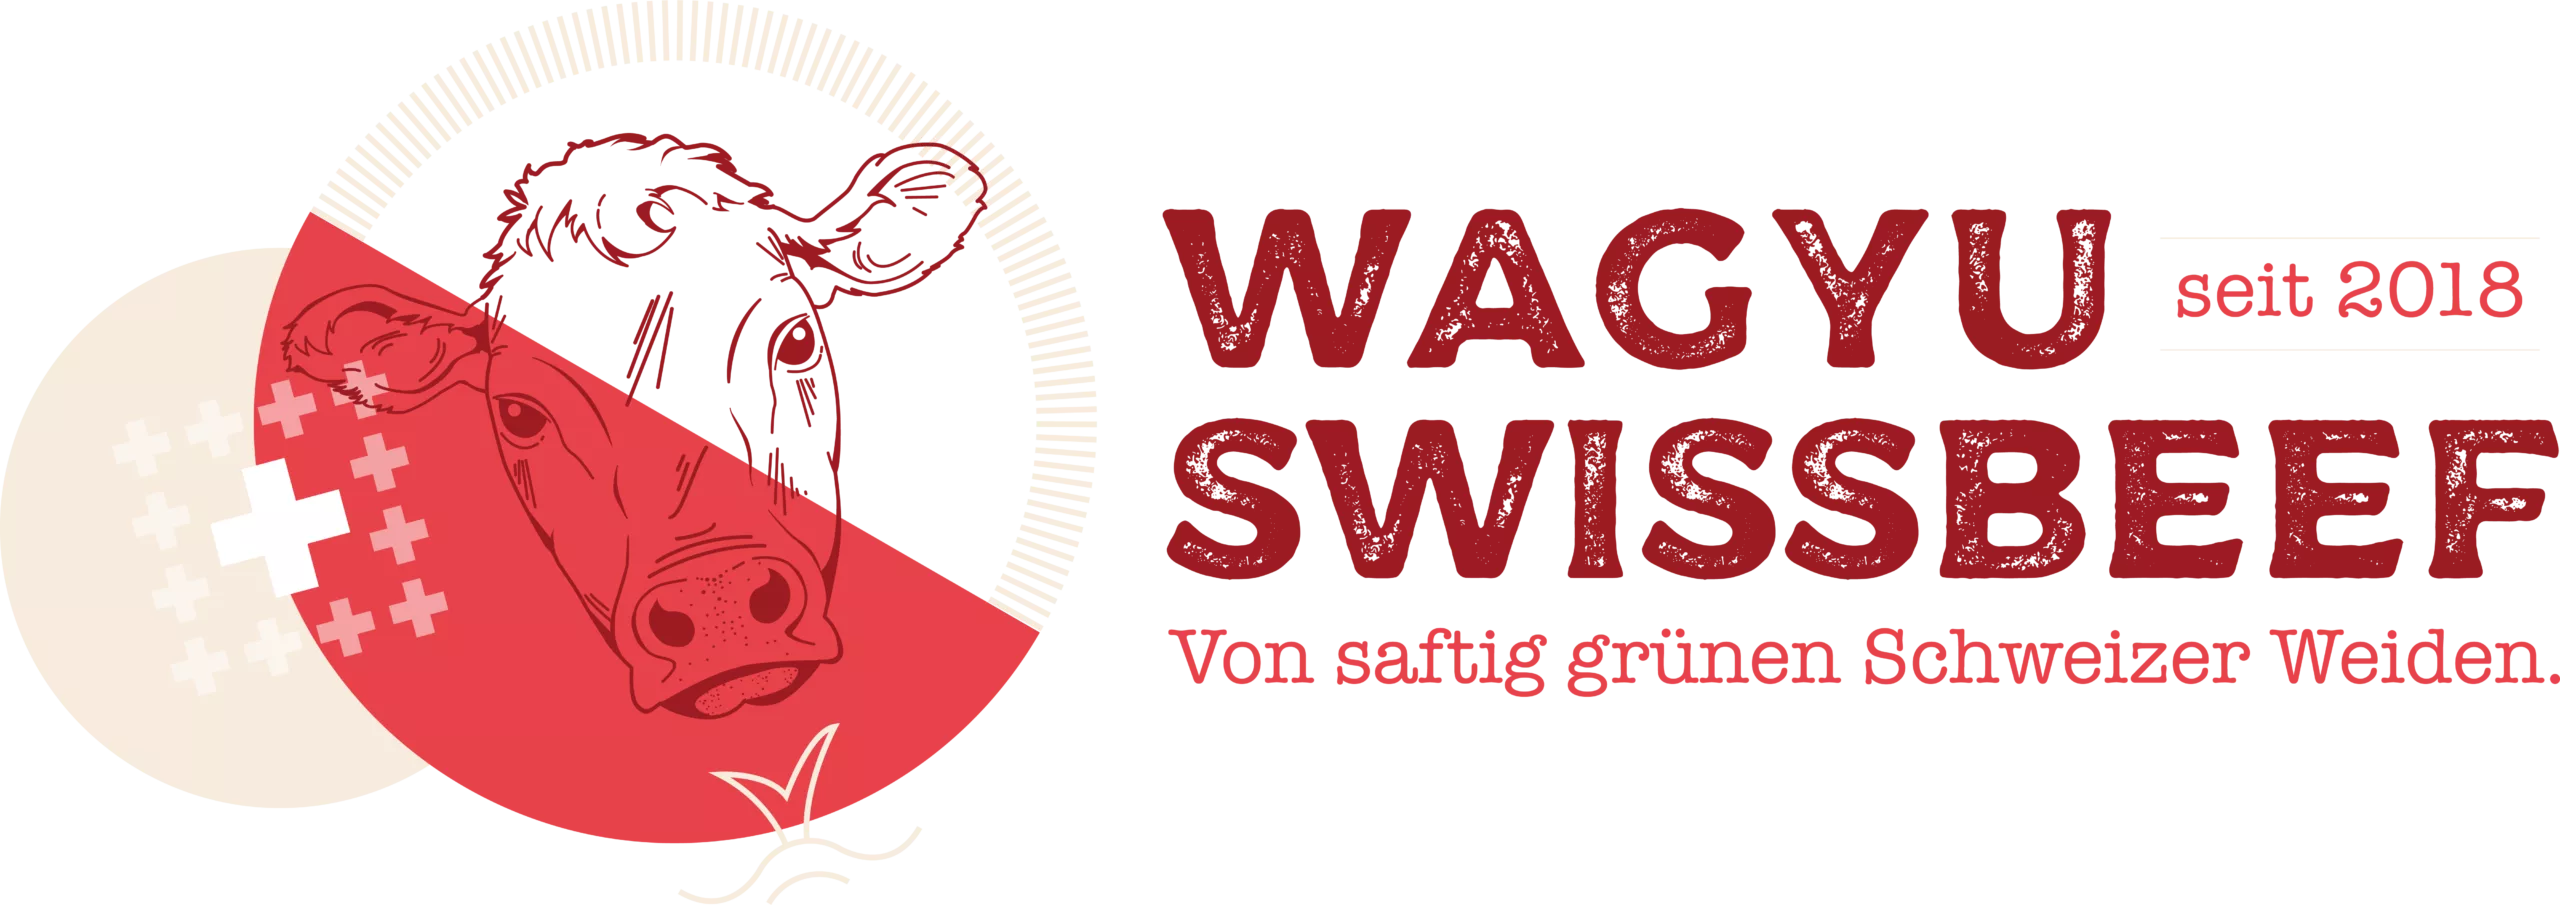 Wagyu Swissbeef